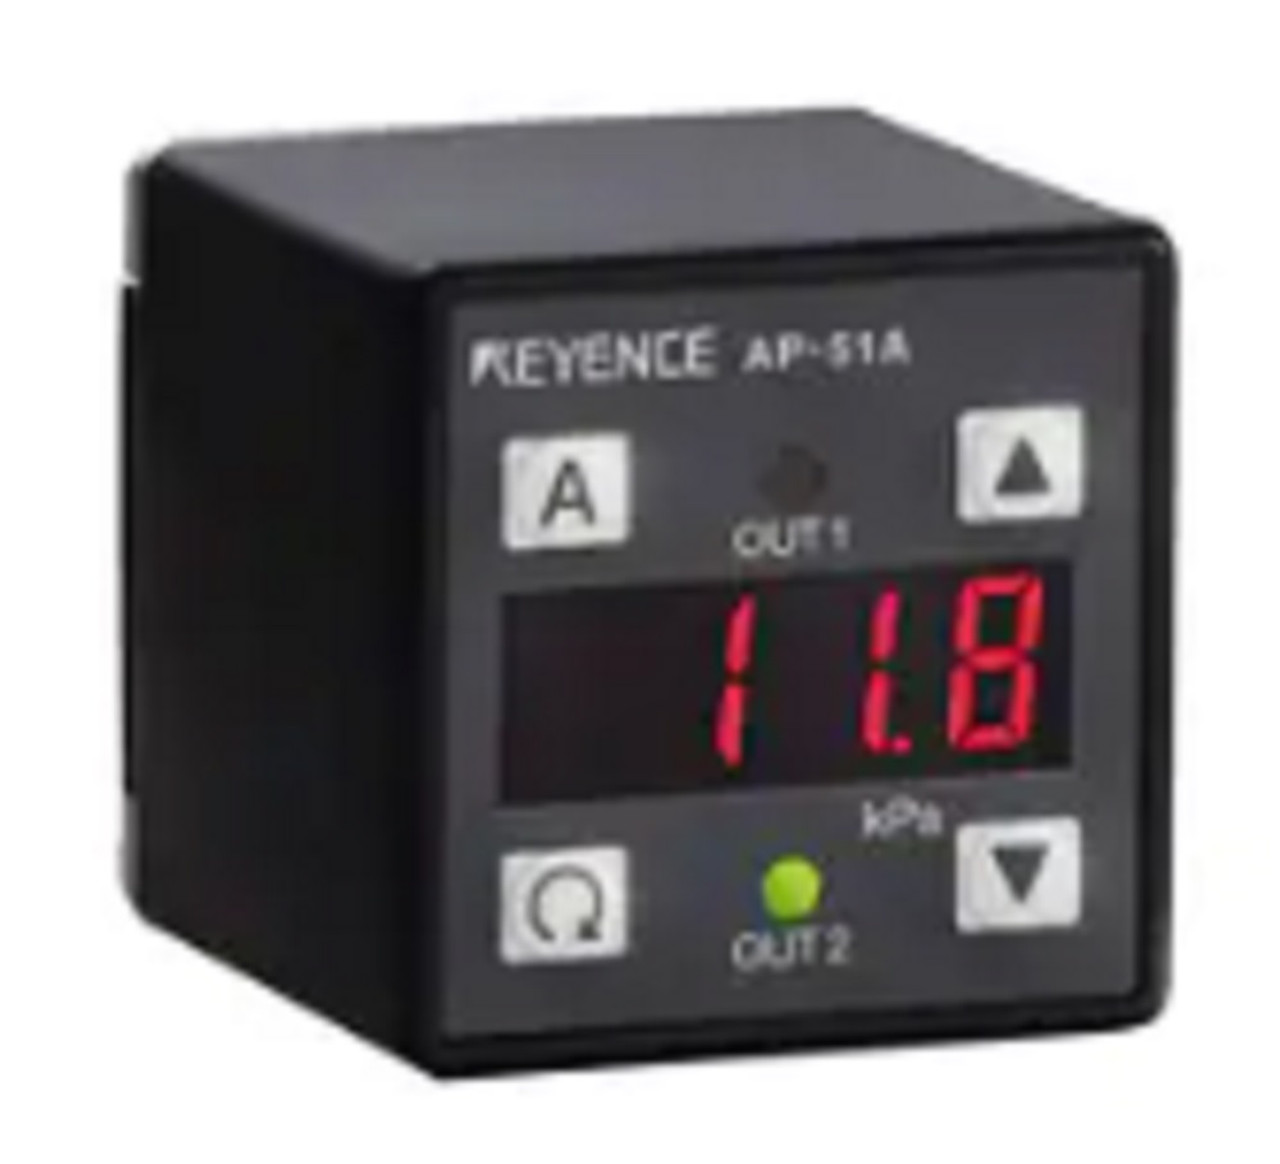 Keyence AP-53A Compact Pressure Sensor, Main Unit, Positive-Press, 1 Mpa, NPN [Refurbished]